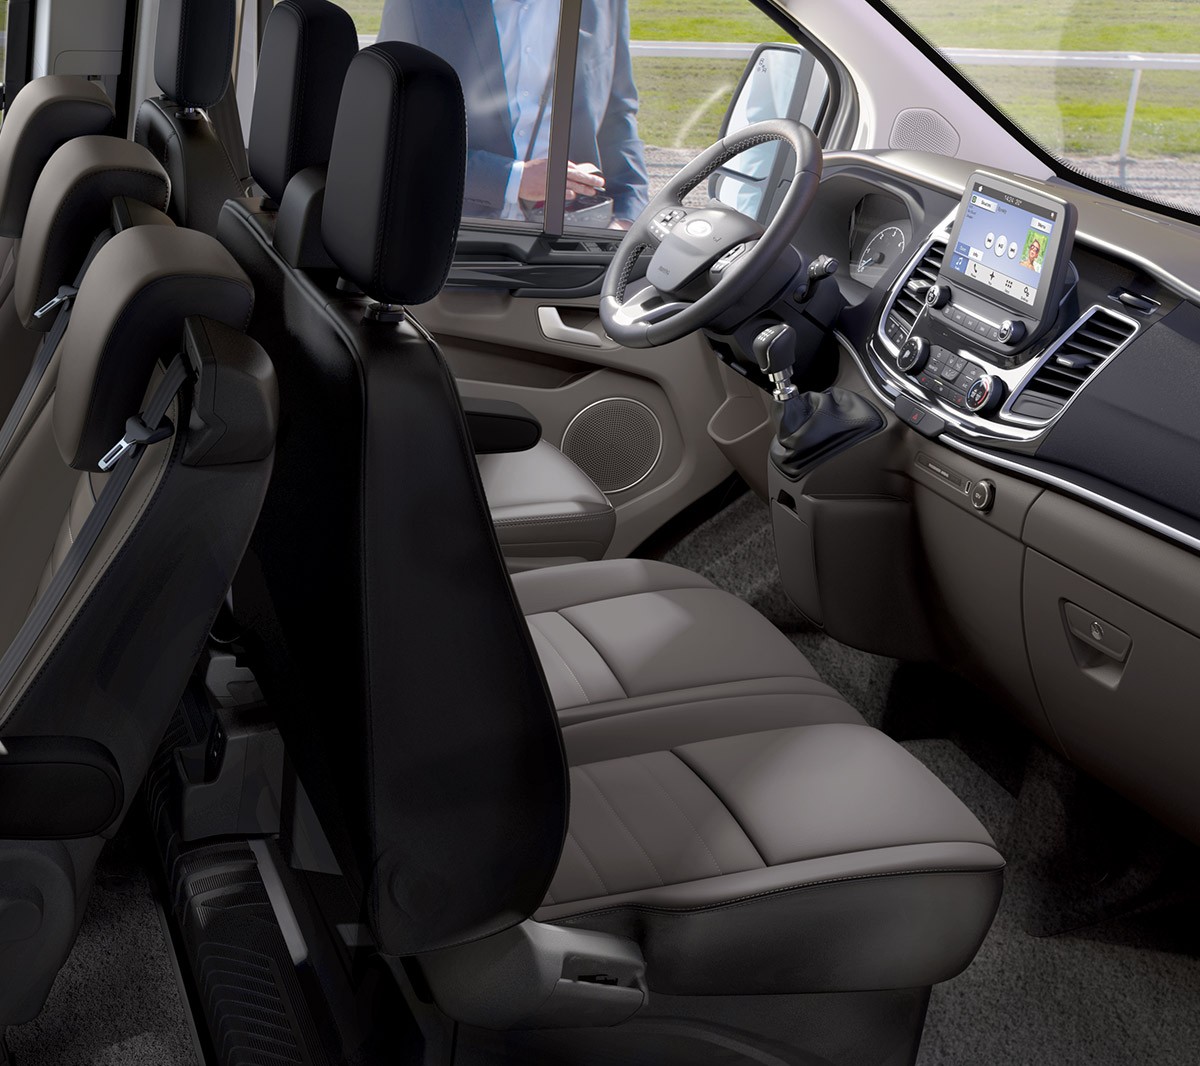 New Tourneo Custom interior seating plan